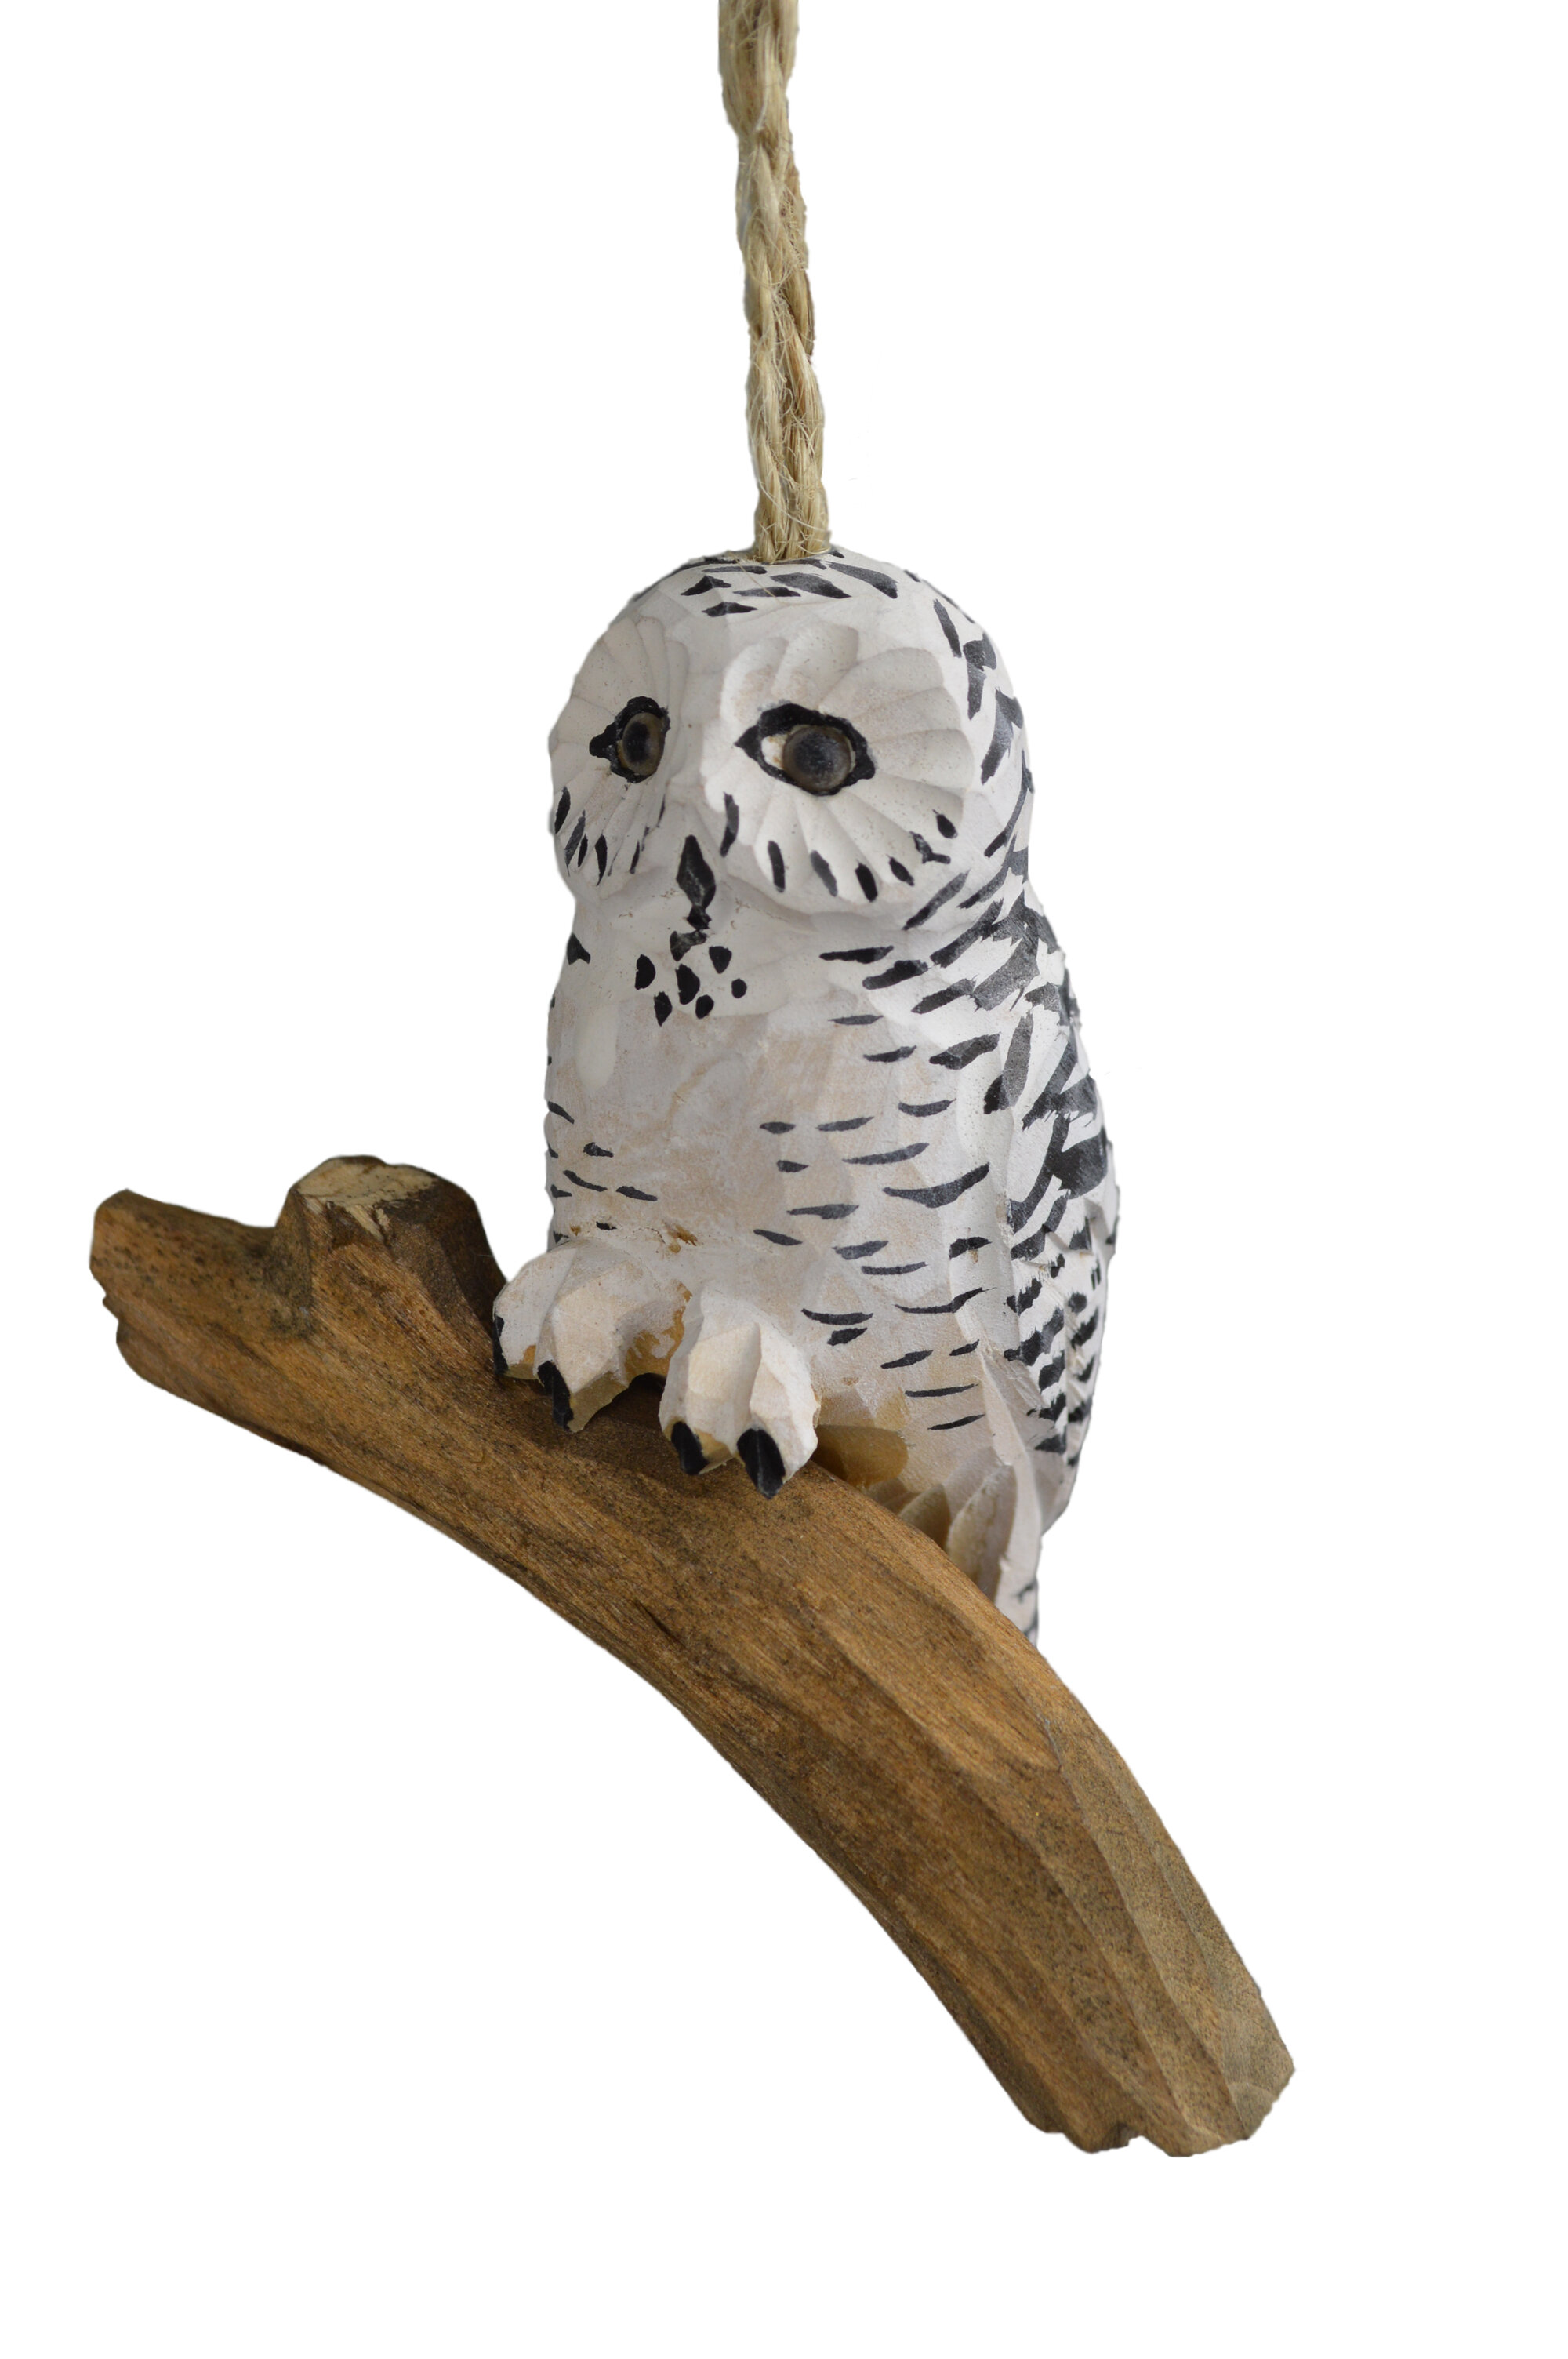 The Holiday Aisle Owl Clock Hanging Figurine 